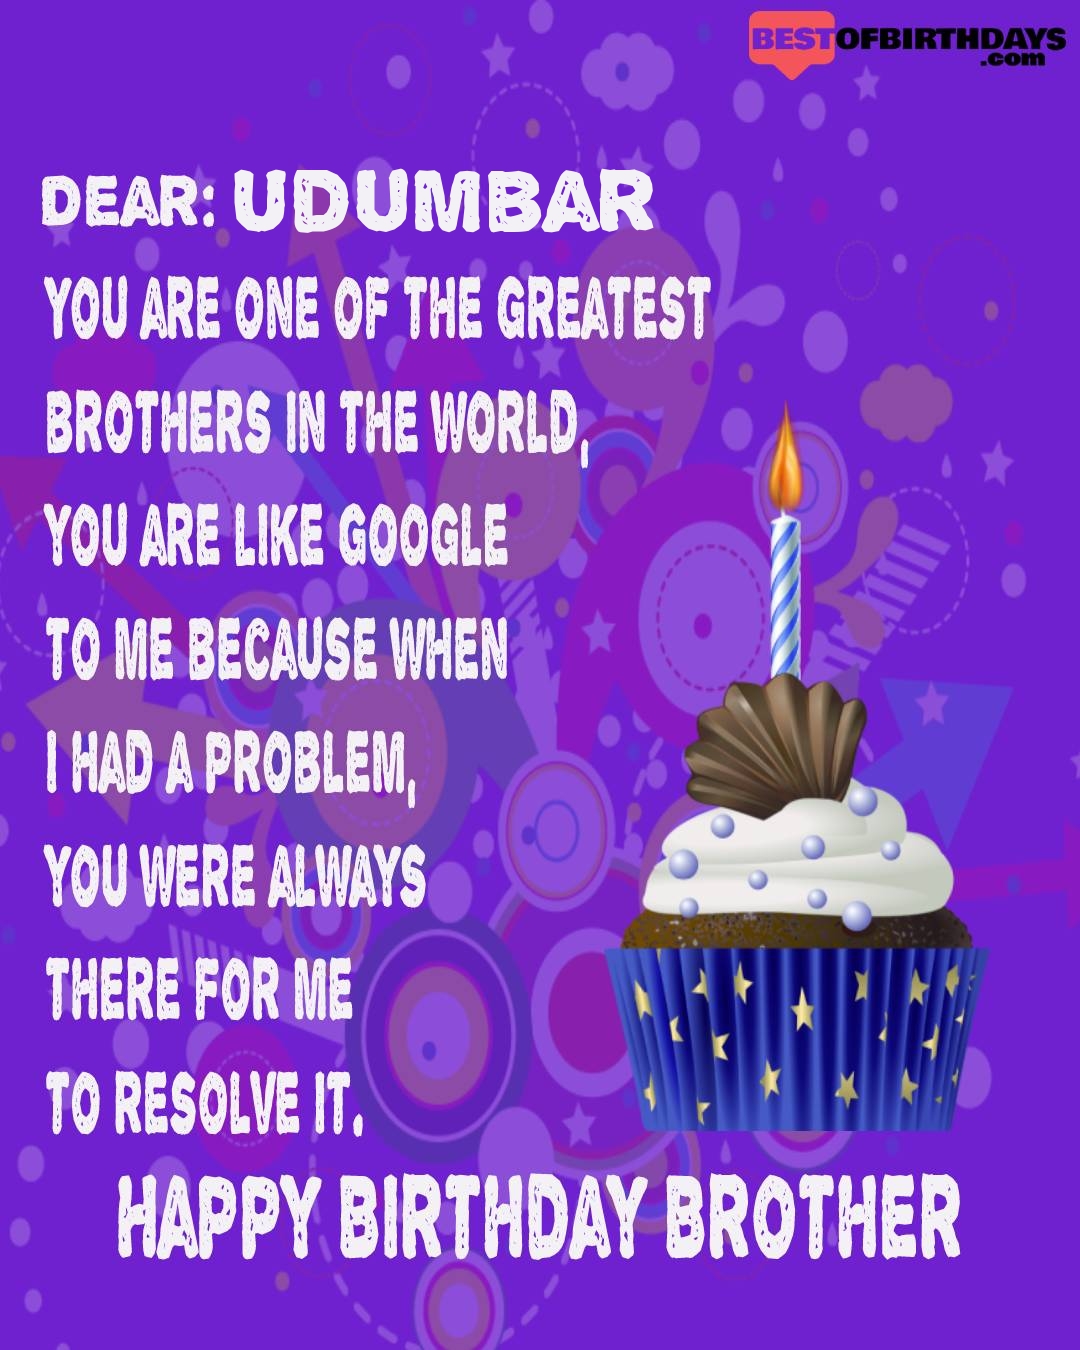 Happy birthday udumbar bhai brother bro